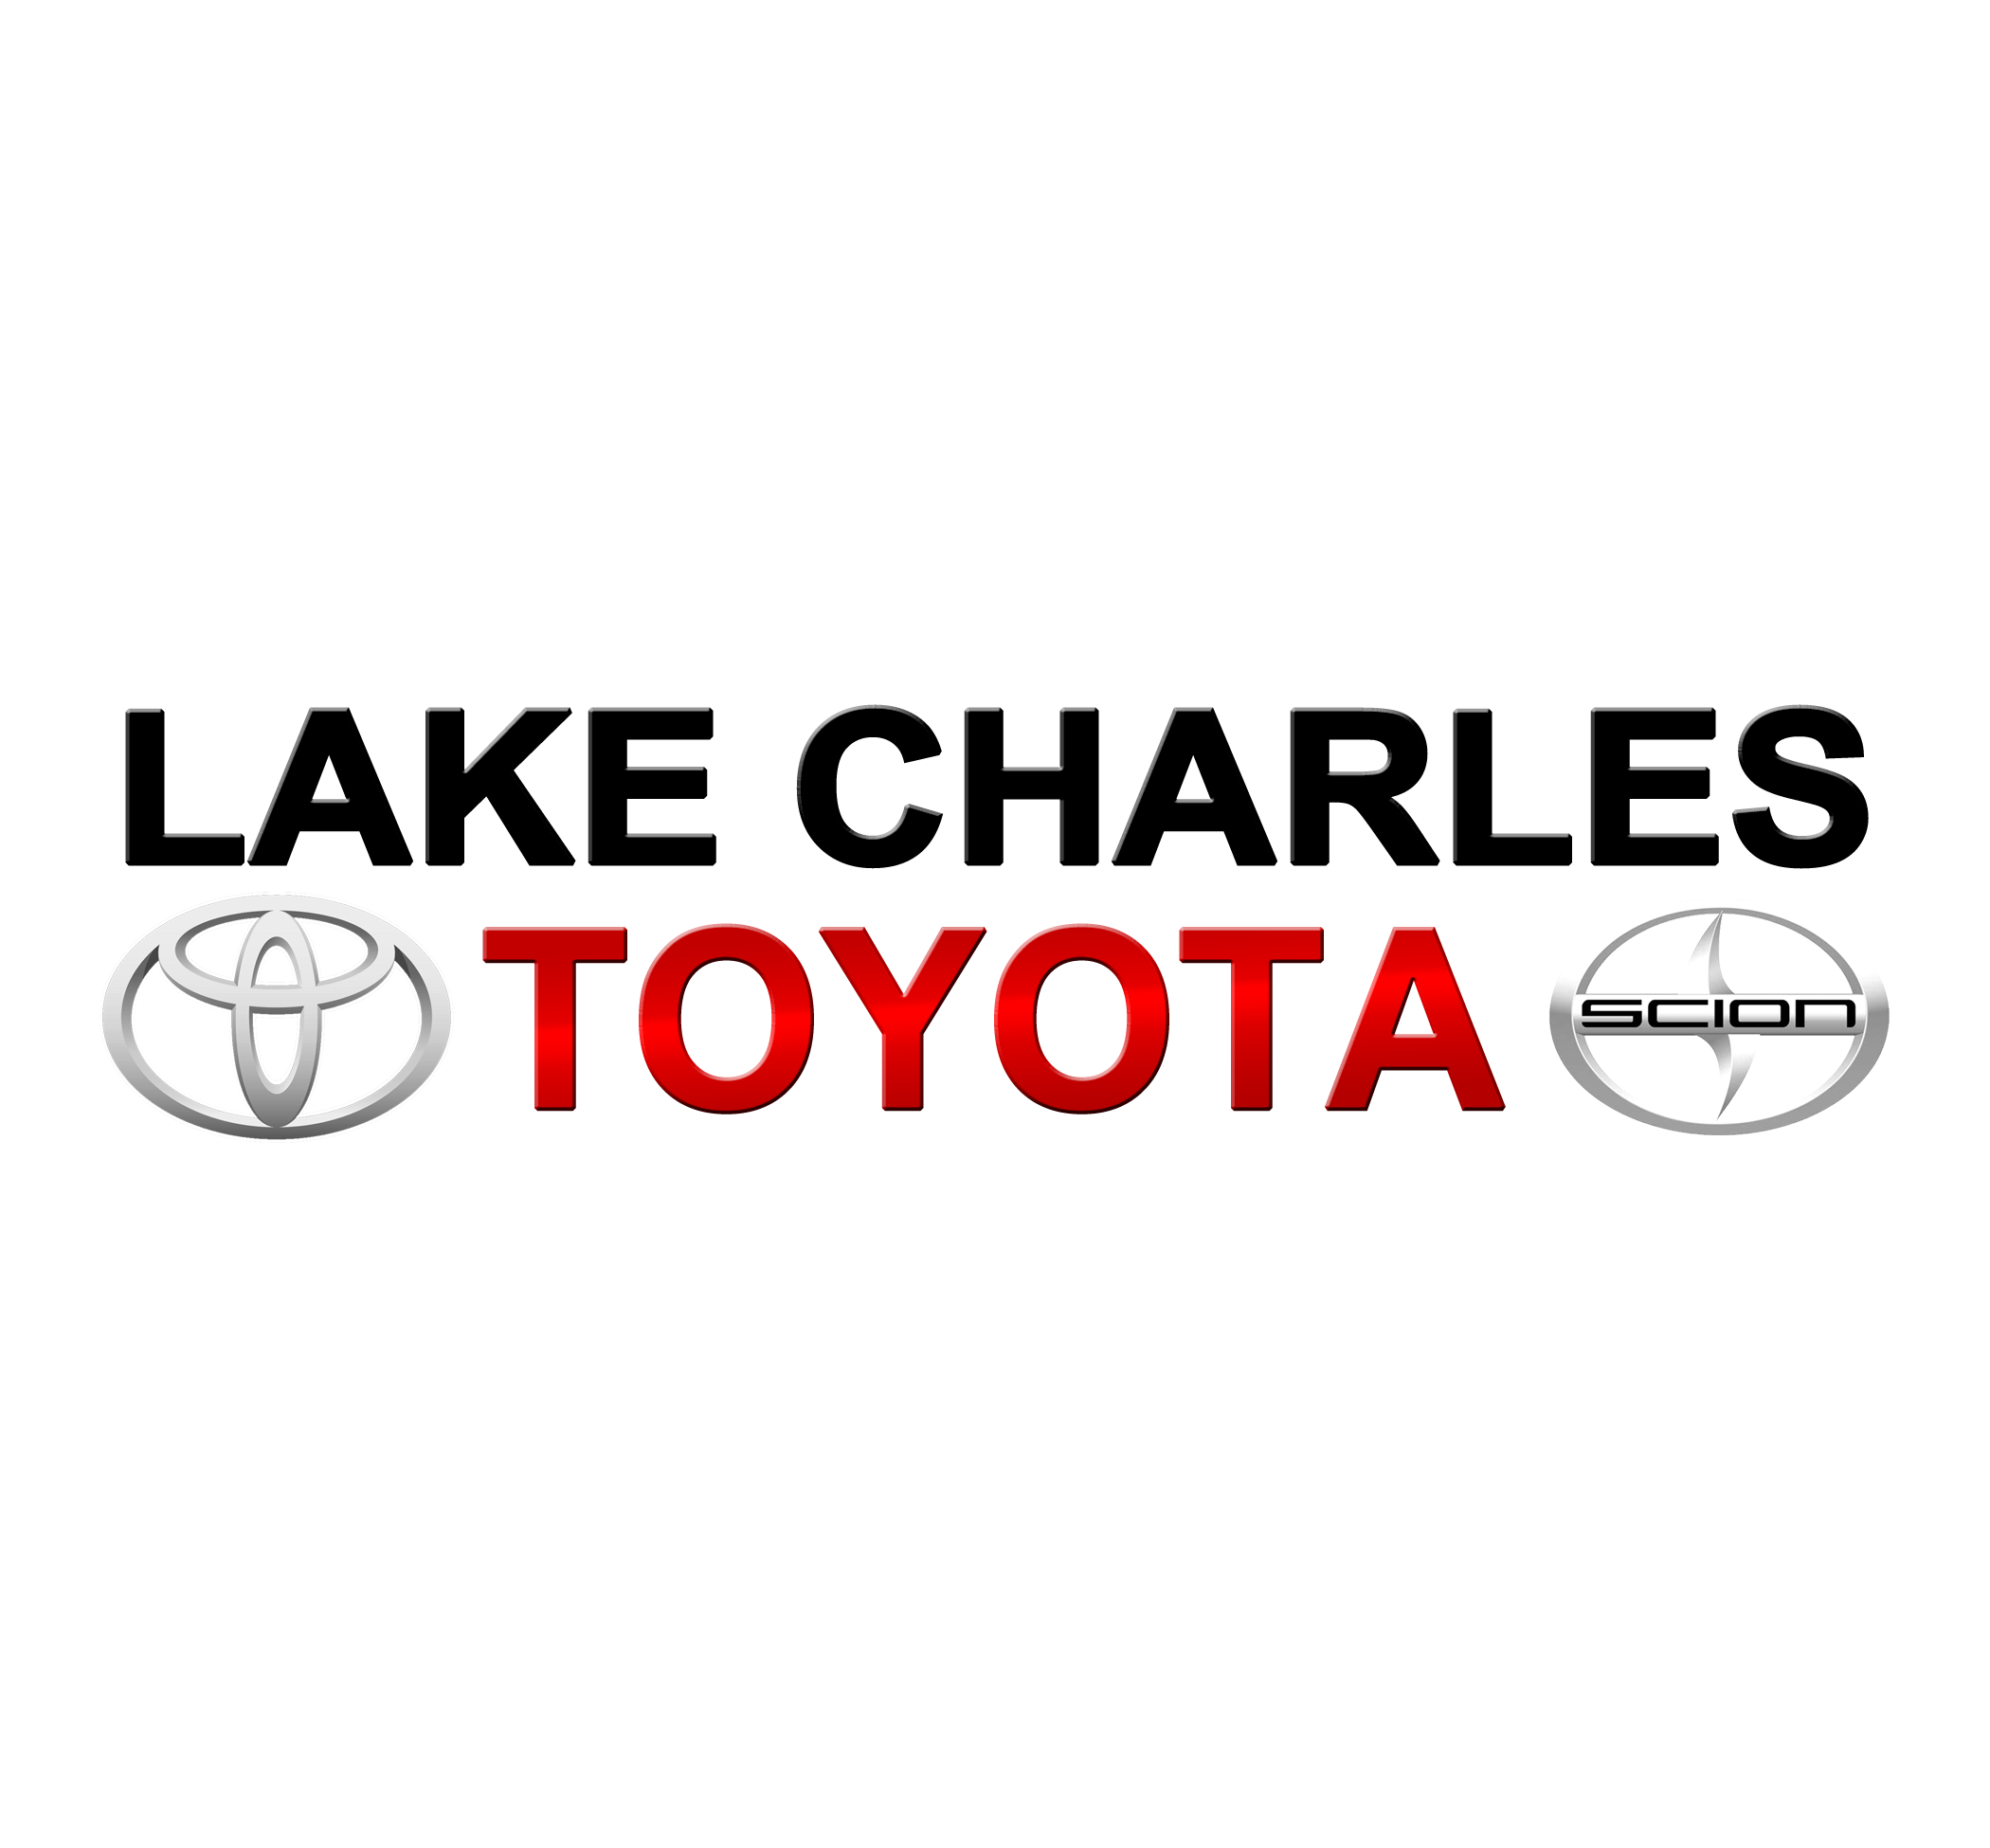 Lake Charles Toyota